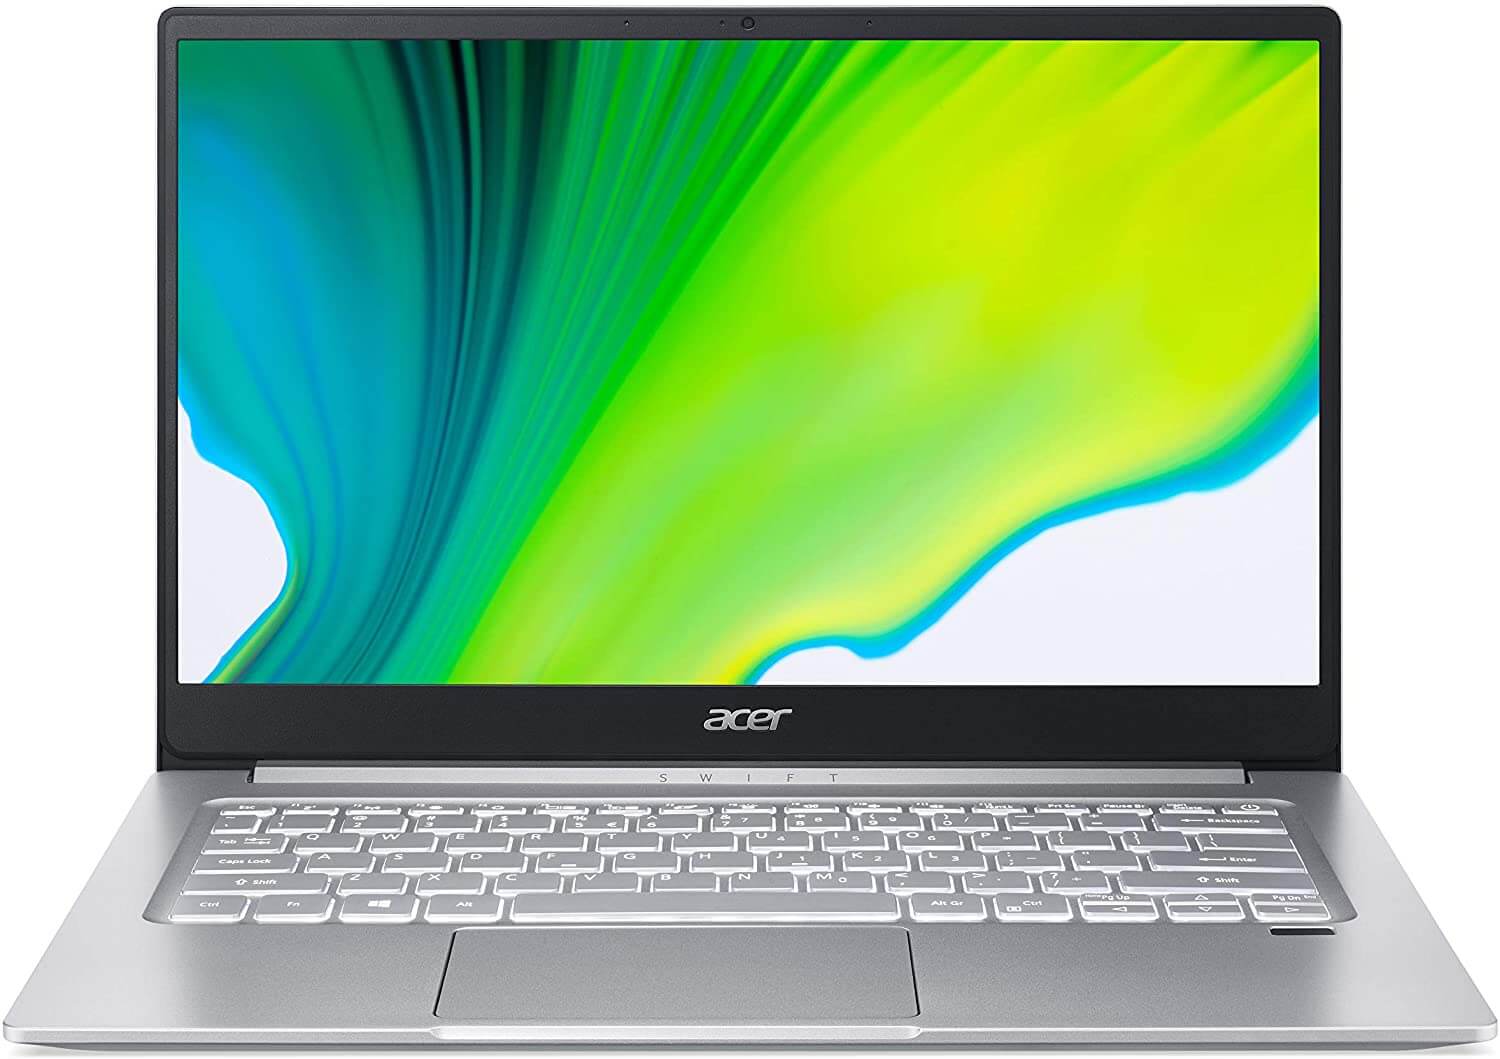 3. Acer Swift 3 Thin & Light Laptop